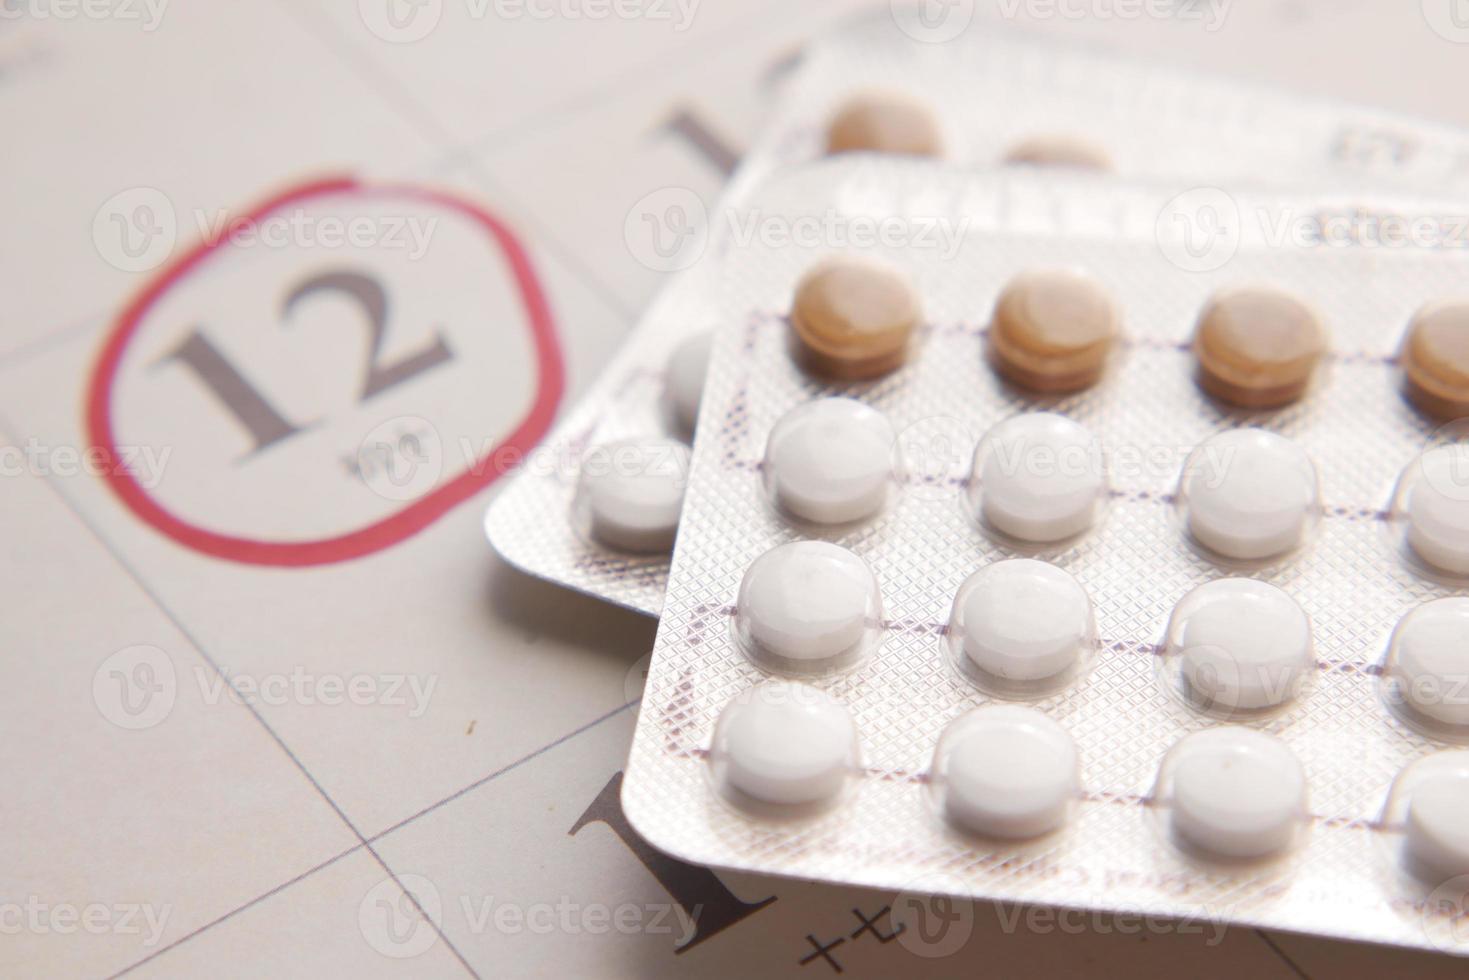 anticonceptiepillen, kalender op tafel close-up foto